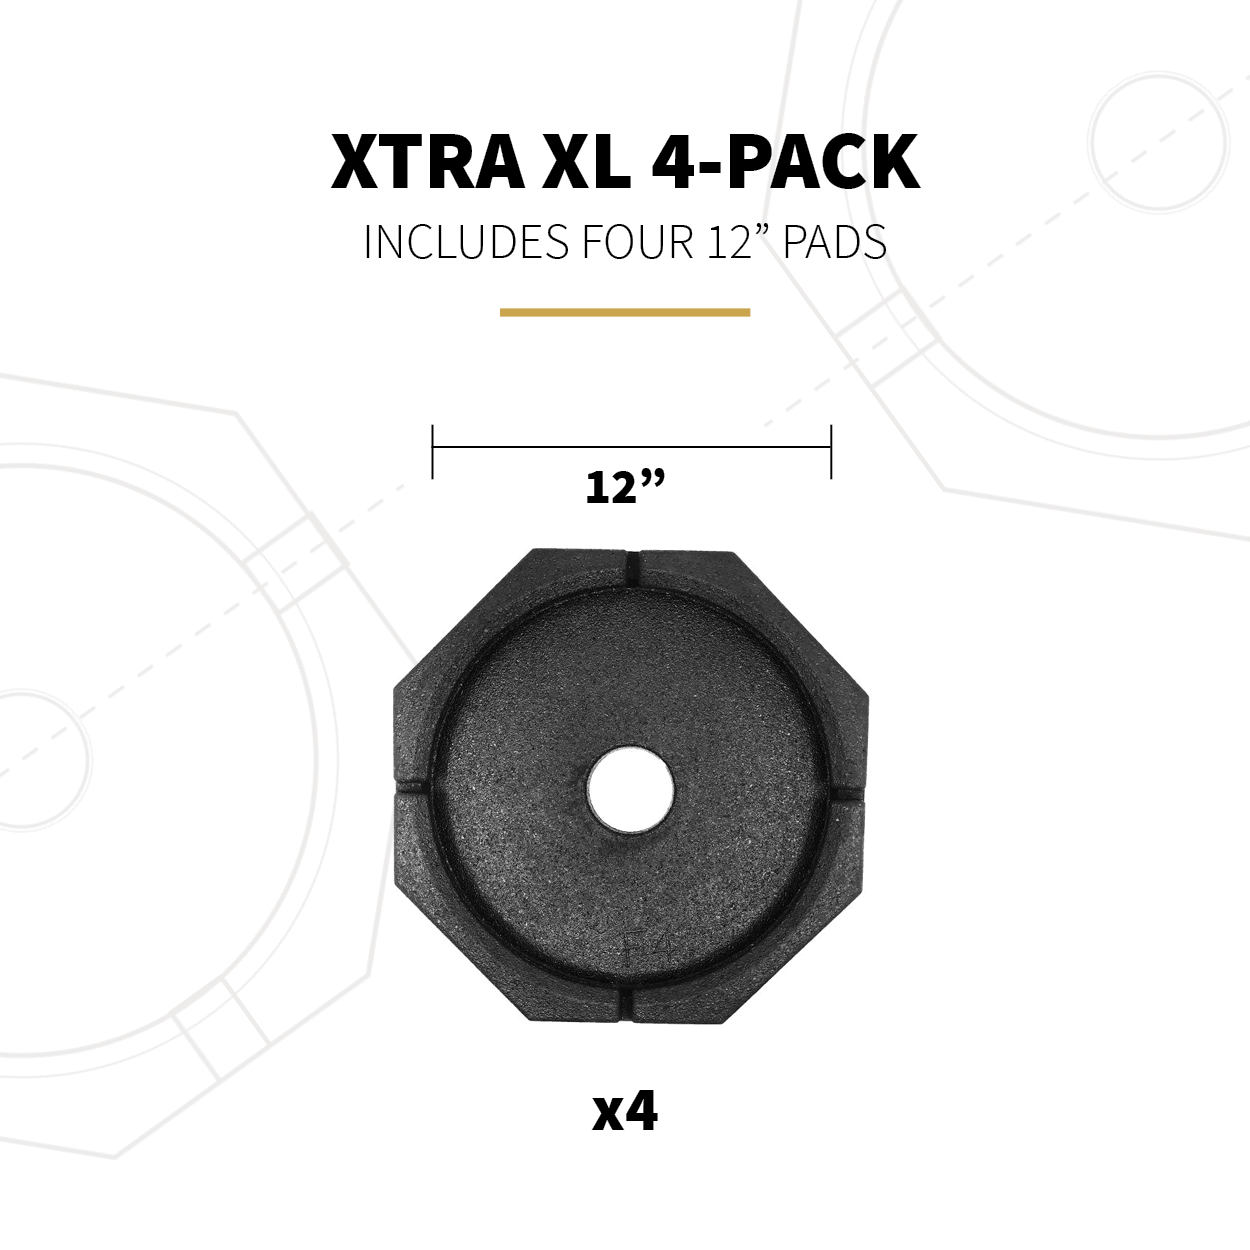 XTRA XL 4-Pack Specs